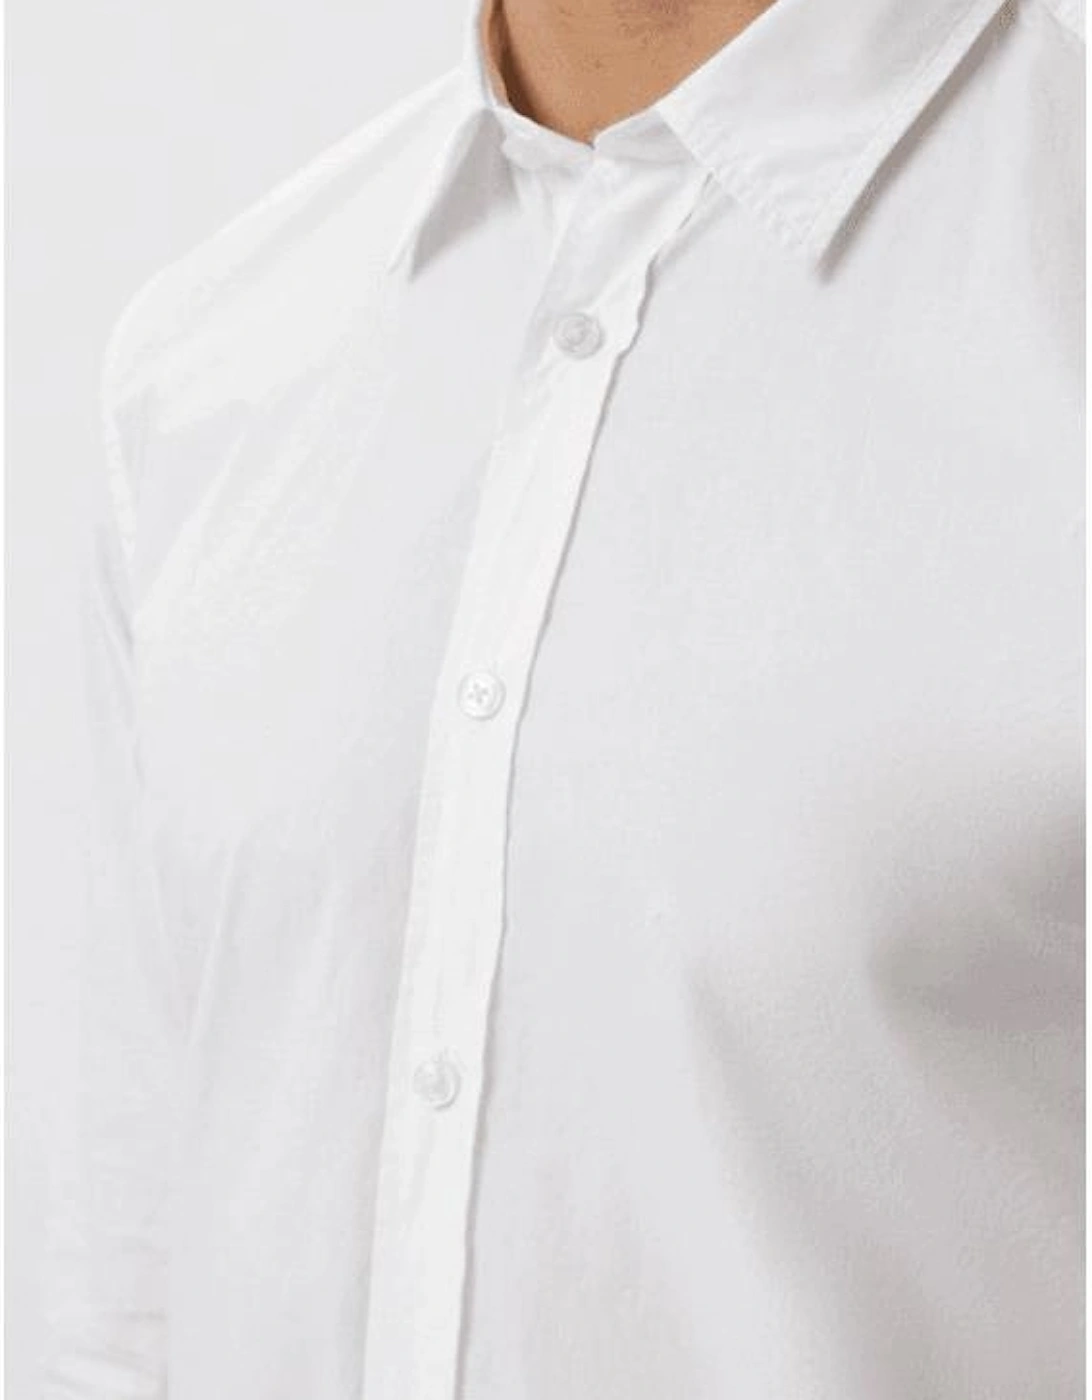 S-Roan Slim Fit Long Sleeve White Shirt